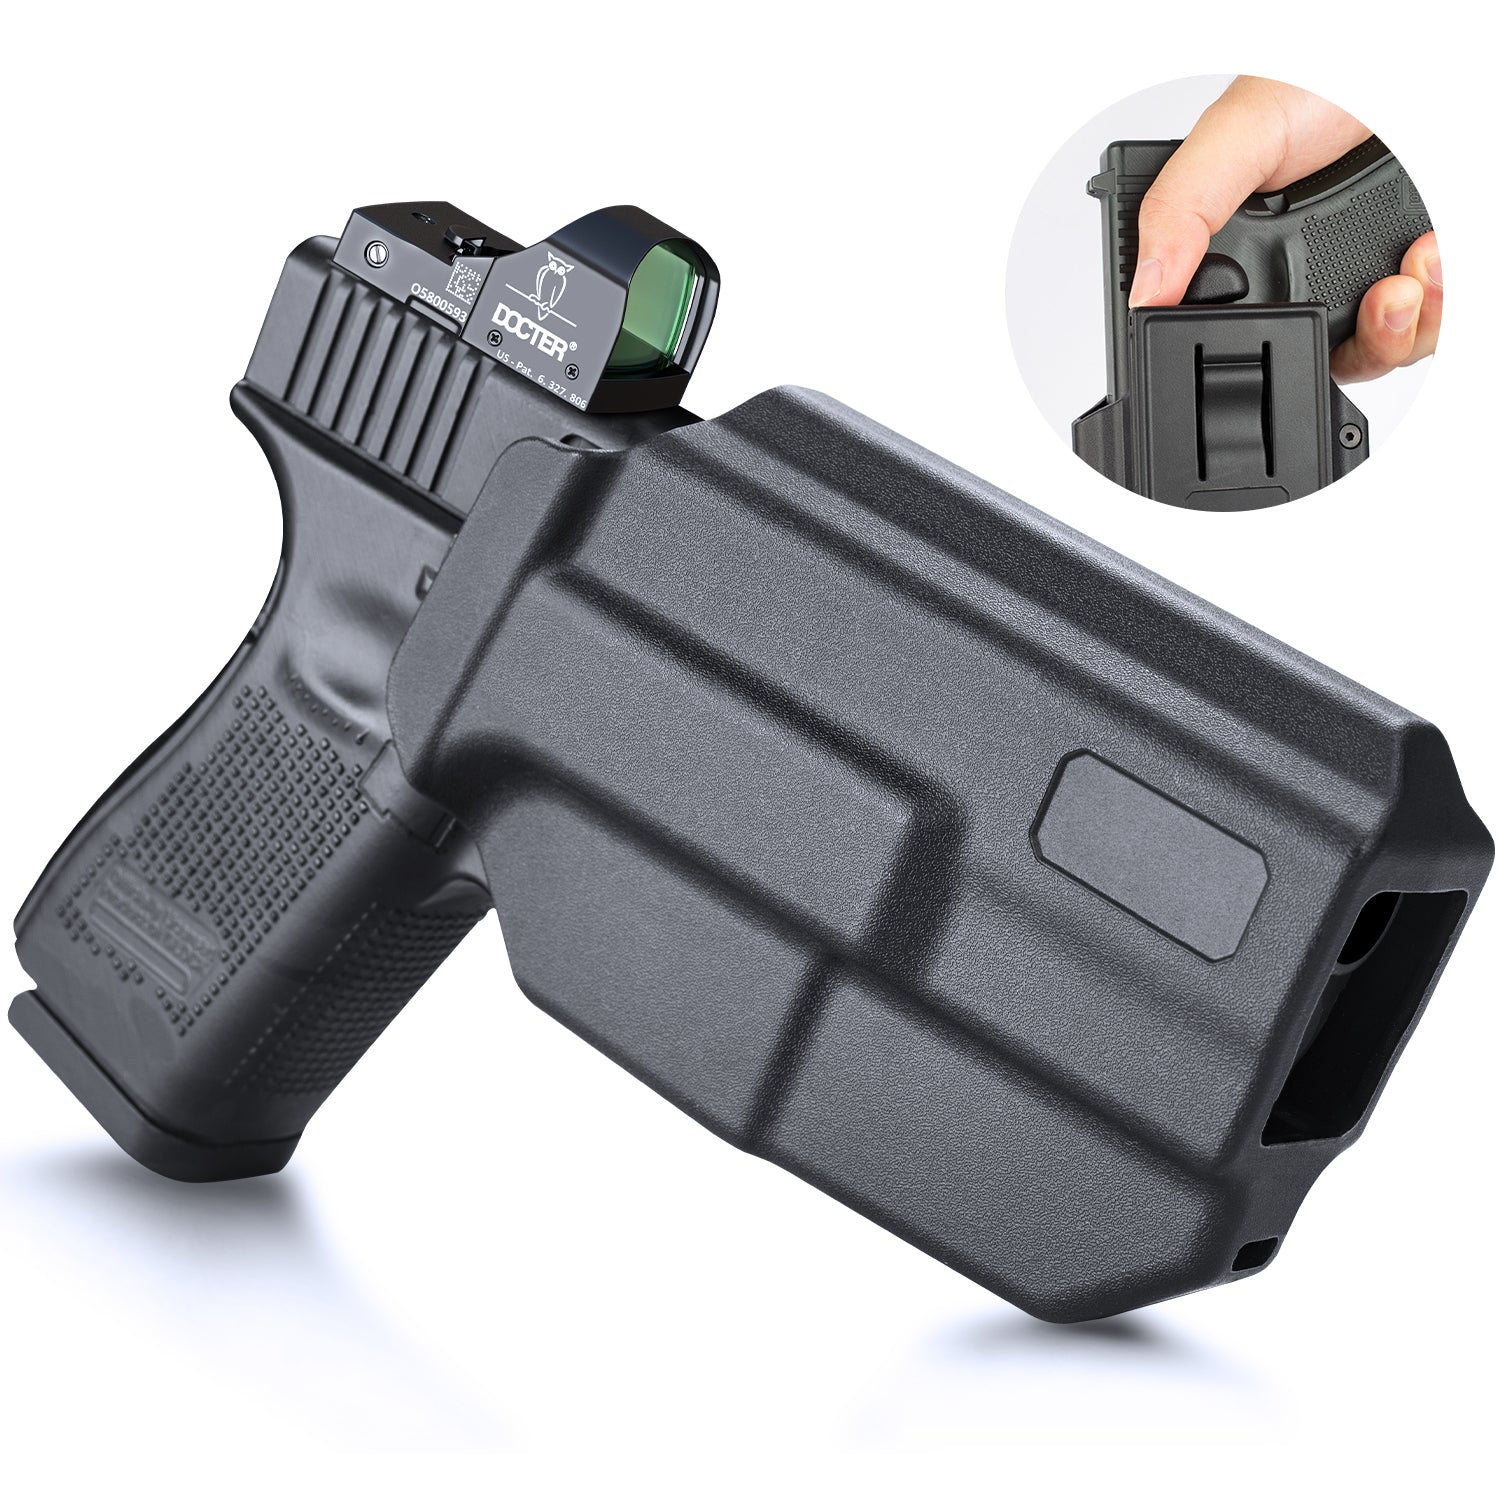 Glock 19 Holster - Made In U.S.A. - Lifetime Warranty